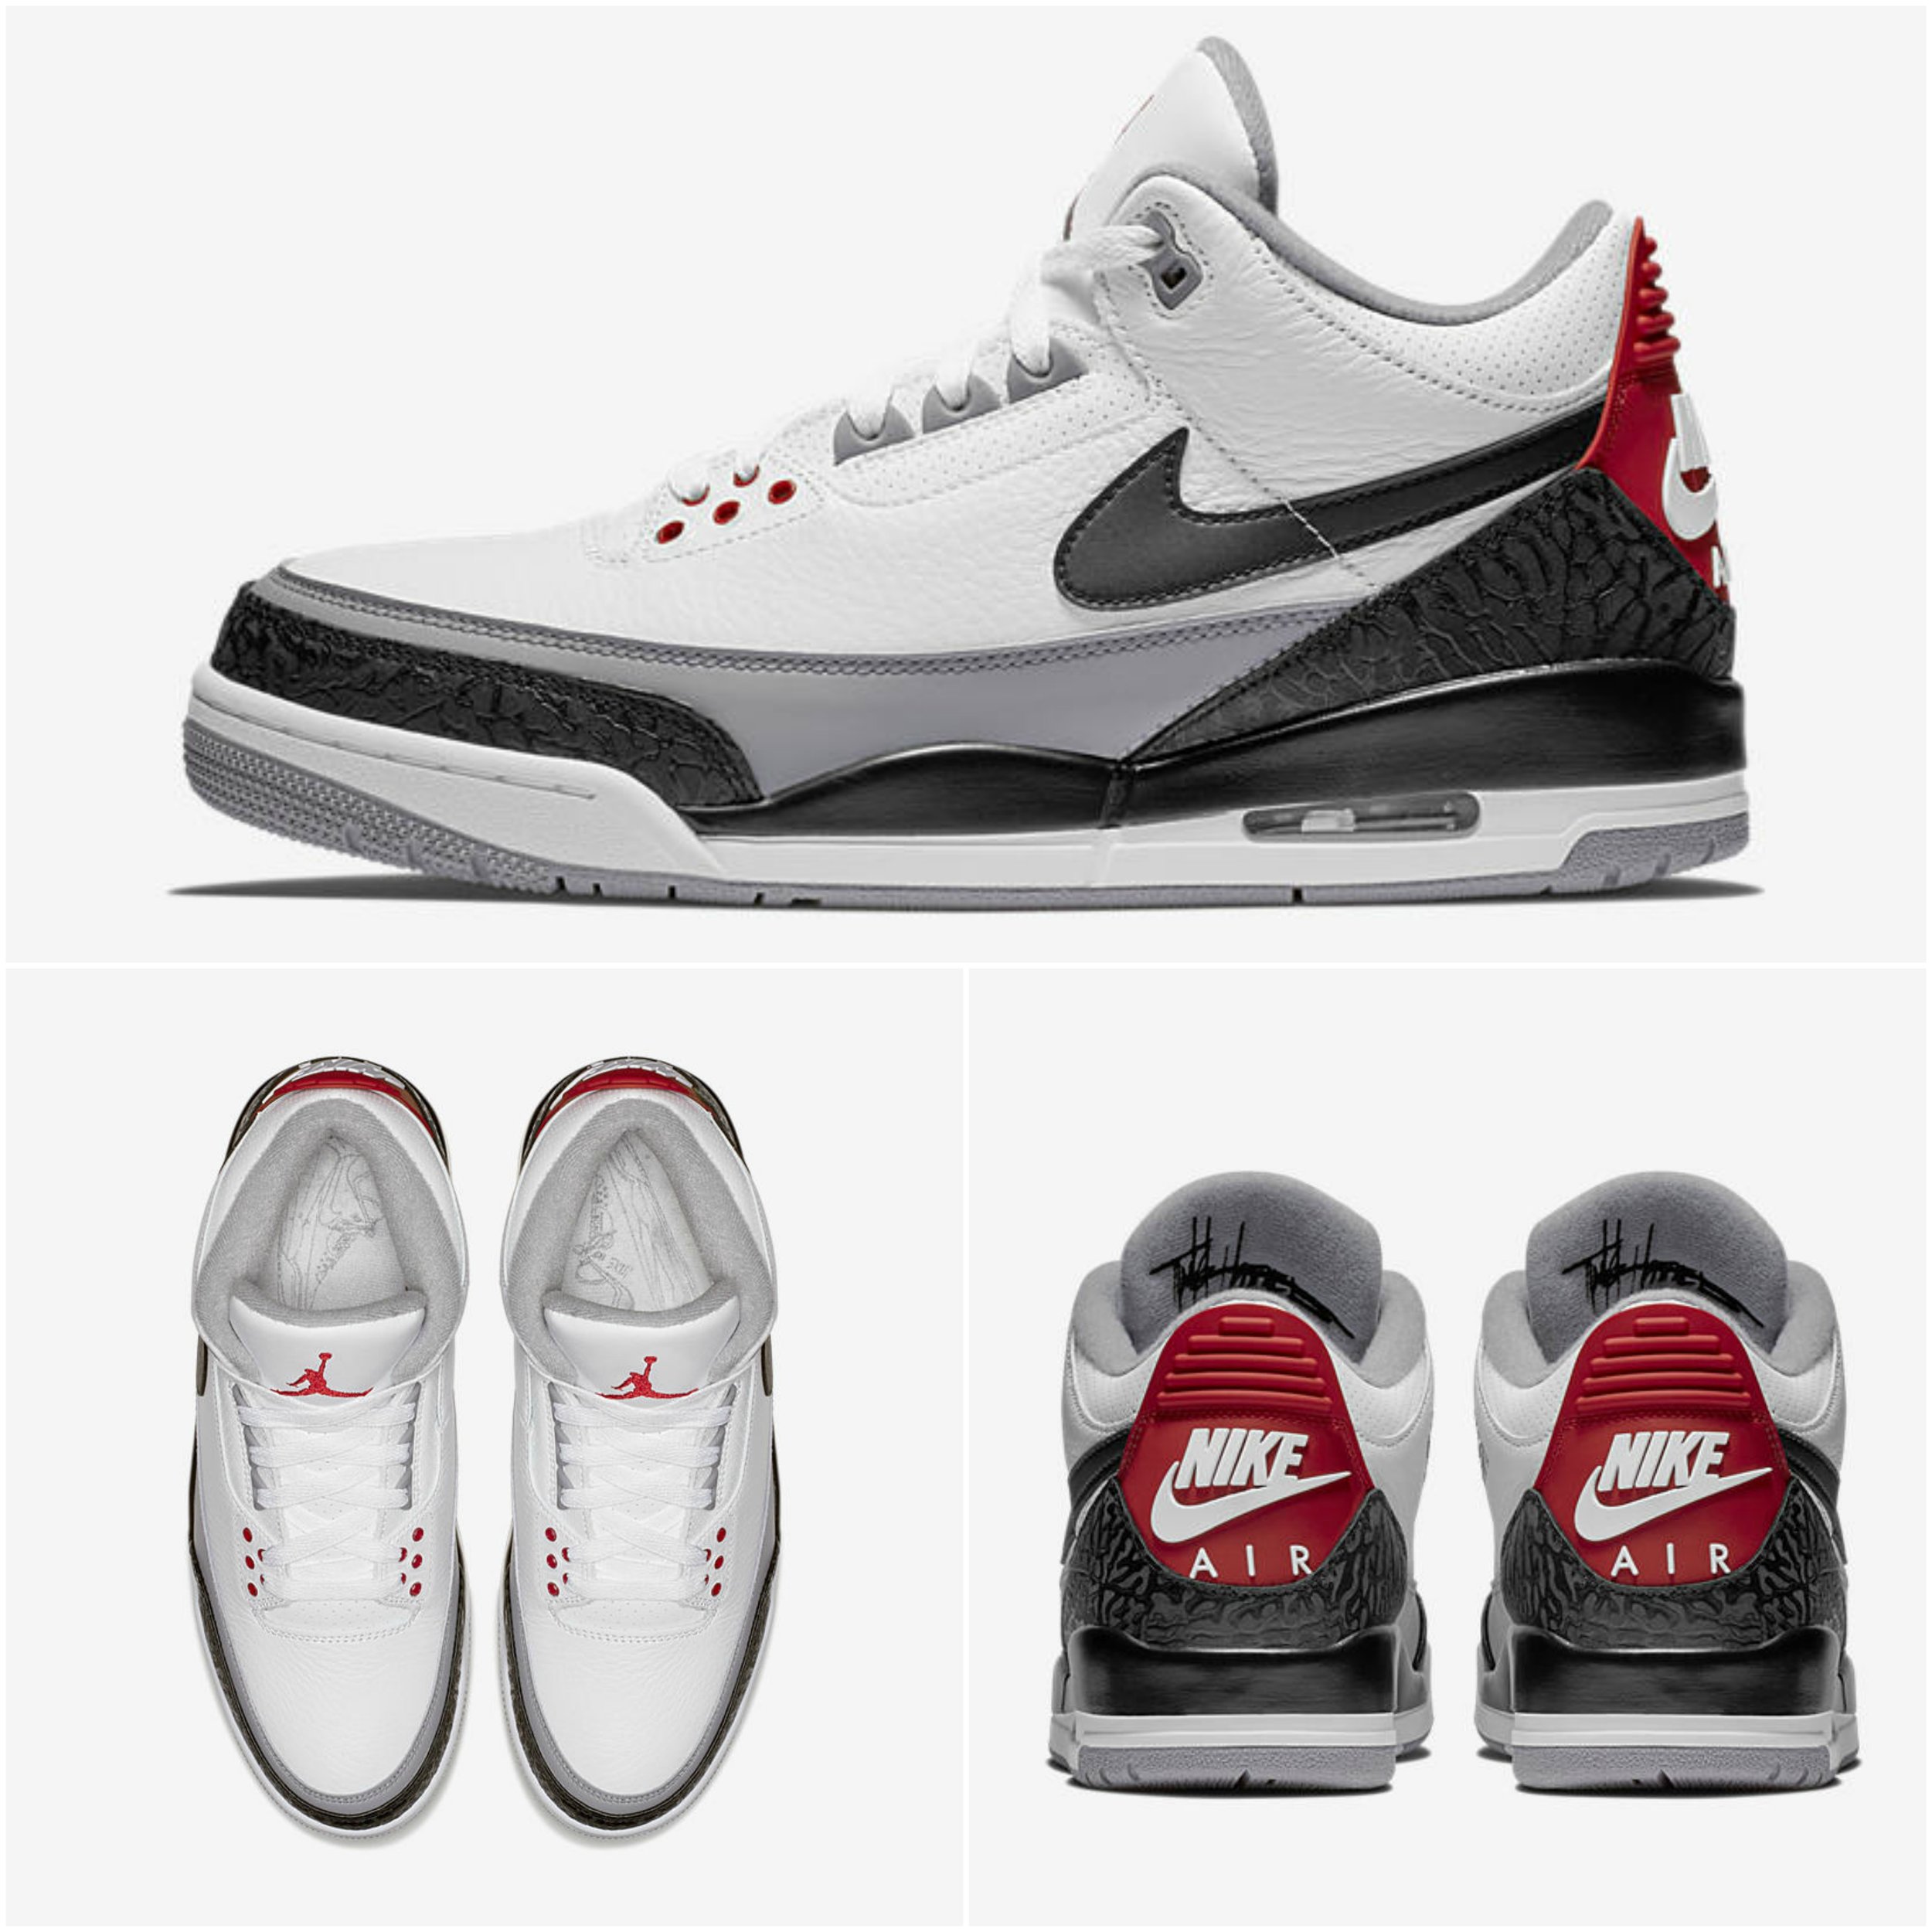 Now Available: Air Jordan 3 Retro "Tinker Hatfield" — Sneaker Shouts